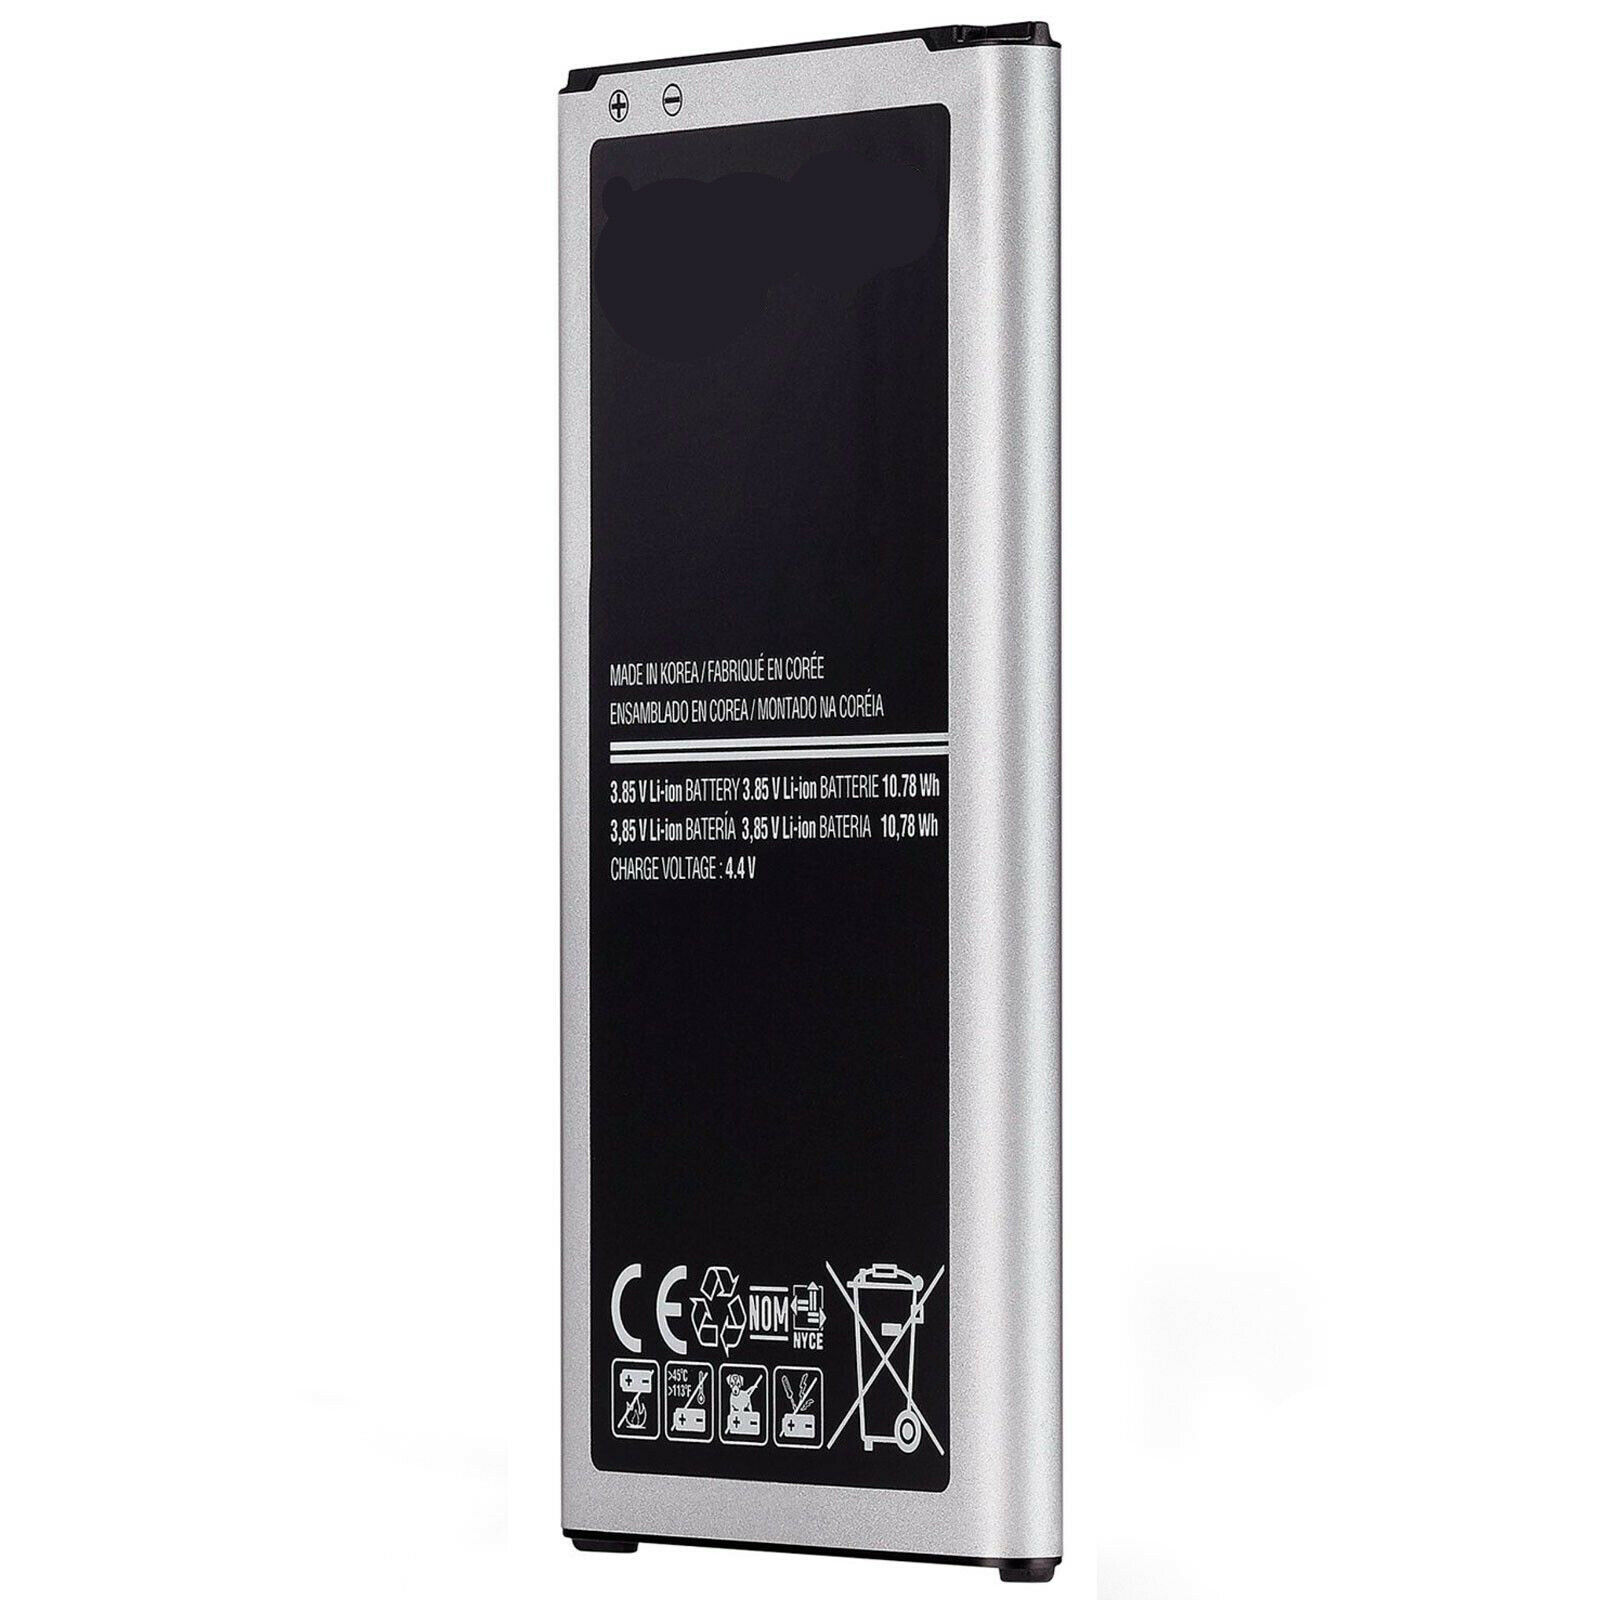 Oem Spec Eb-bg900bbu 2800mah Replacement Battery For Samsung Galaxy S5 Sv I9600